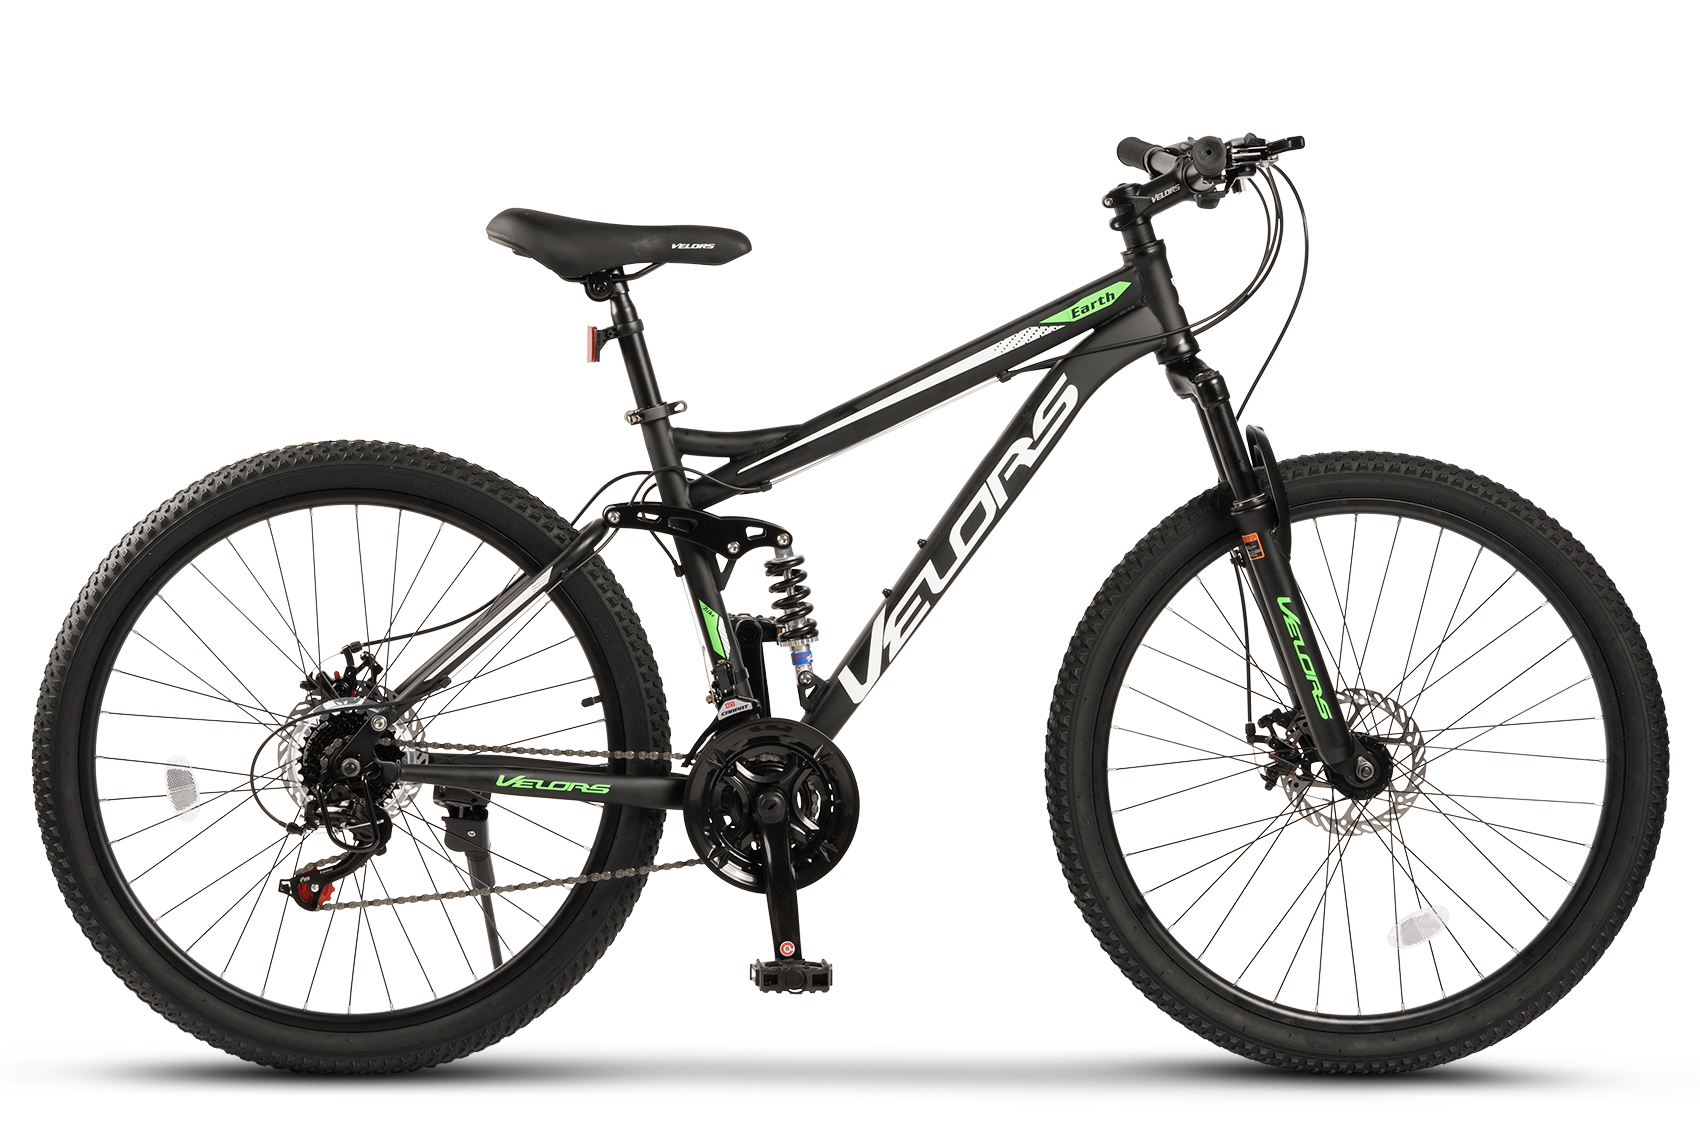 PROMO BICICLETE - Bicicleta MTB Full-Suspension Velors Earth V2660G 26", Negru/Alb/Verde, https:carpatsport.ro